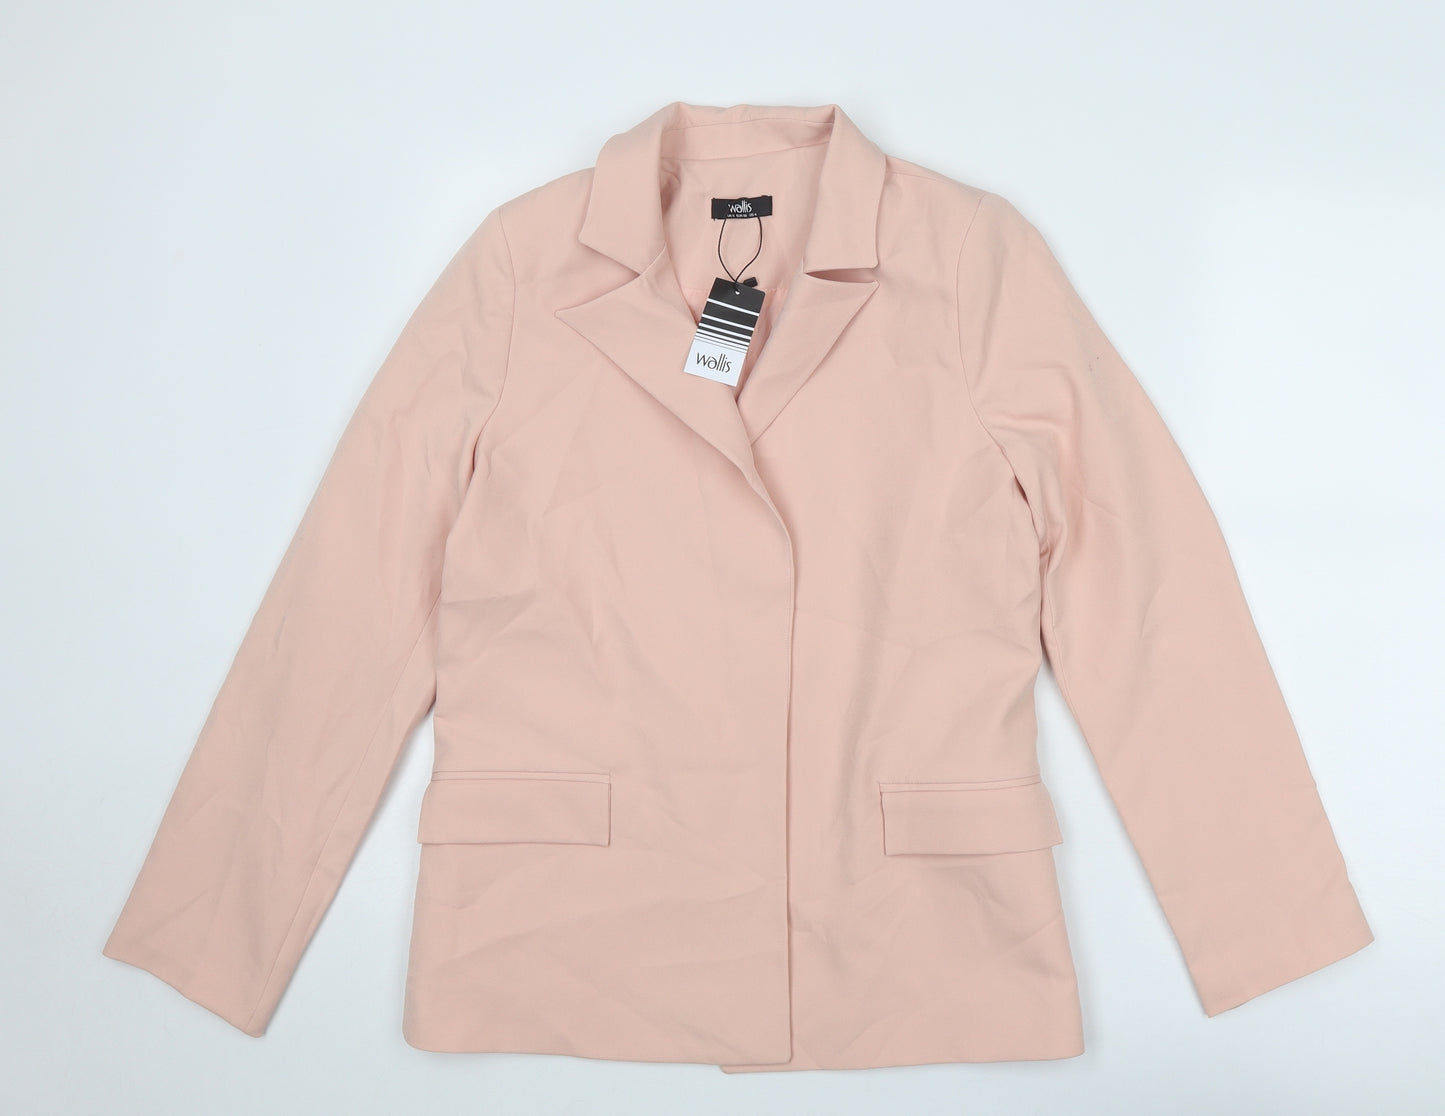 Wallis Womens Pink Jacket Blazer Size 8